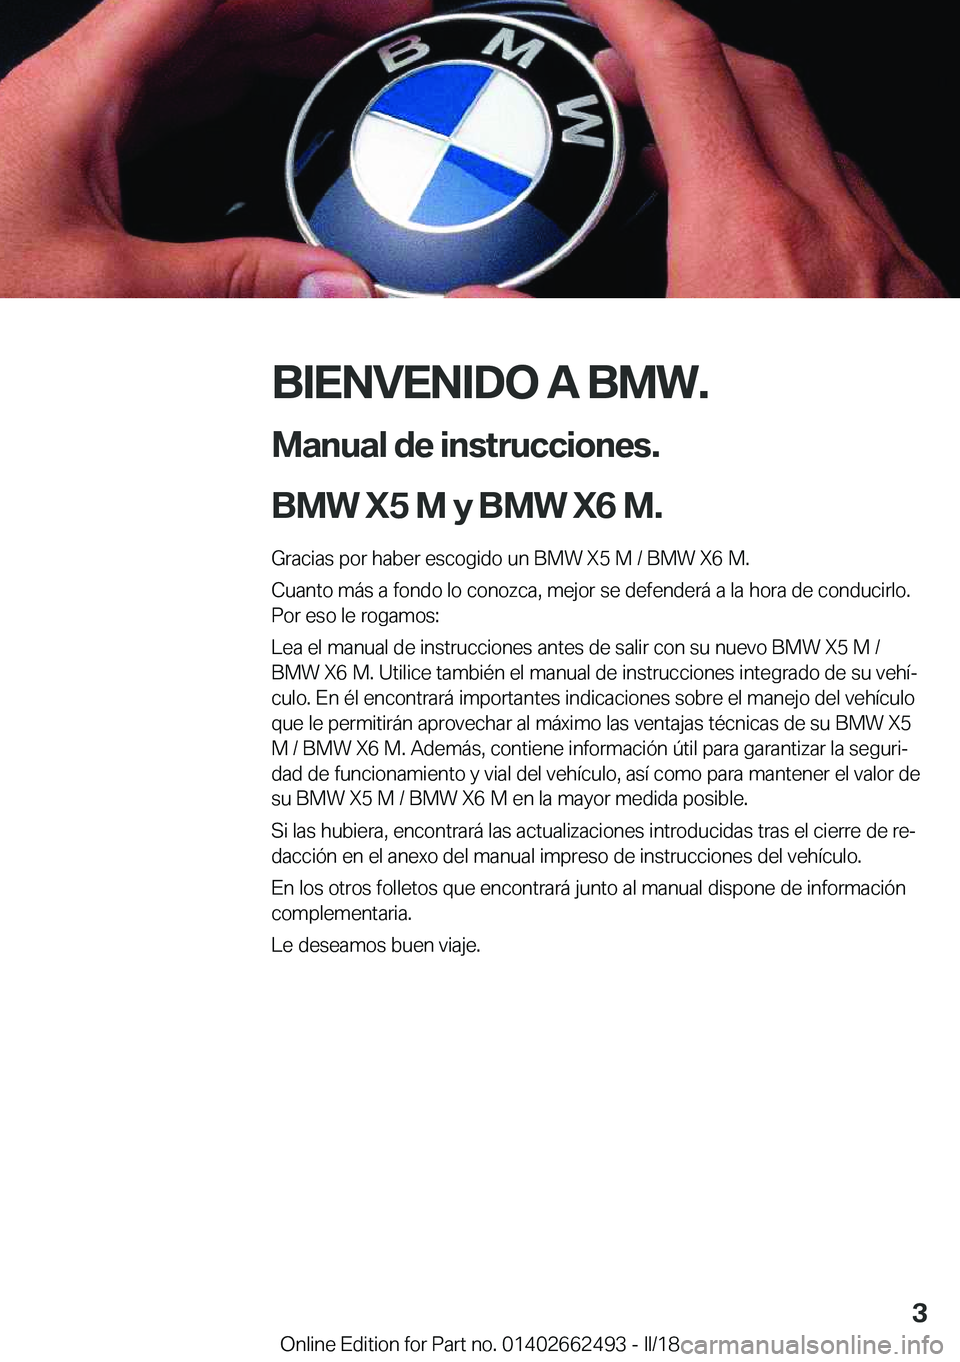 BMW X5 M 2018  Manuales de Empleo (in Spanish) �B�I�E�N�V�E�N�I�D�O��A��B�M�W�.
�M�a�n�u�a�l��d�e��i�n�s�t�r�u�c�c�i�o�n�e�s�.
�B�M�W��X�5��M��y��B�M�W��X�6��M�. �G�r�a�c�i�a�s� �p�o�r� �h�a�b�e�r� �e�s�c�o�g�i�d�o� �u�n� �B�M�W� �X�5� �